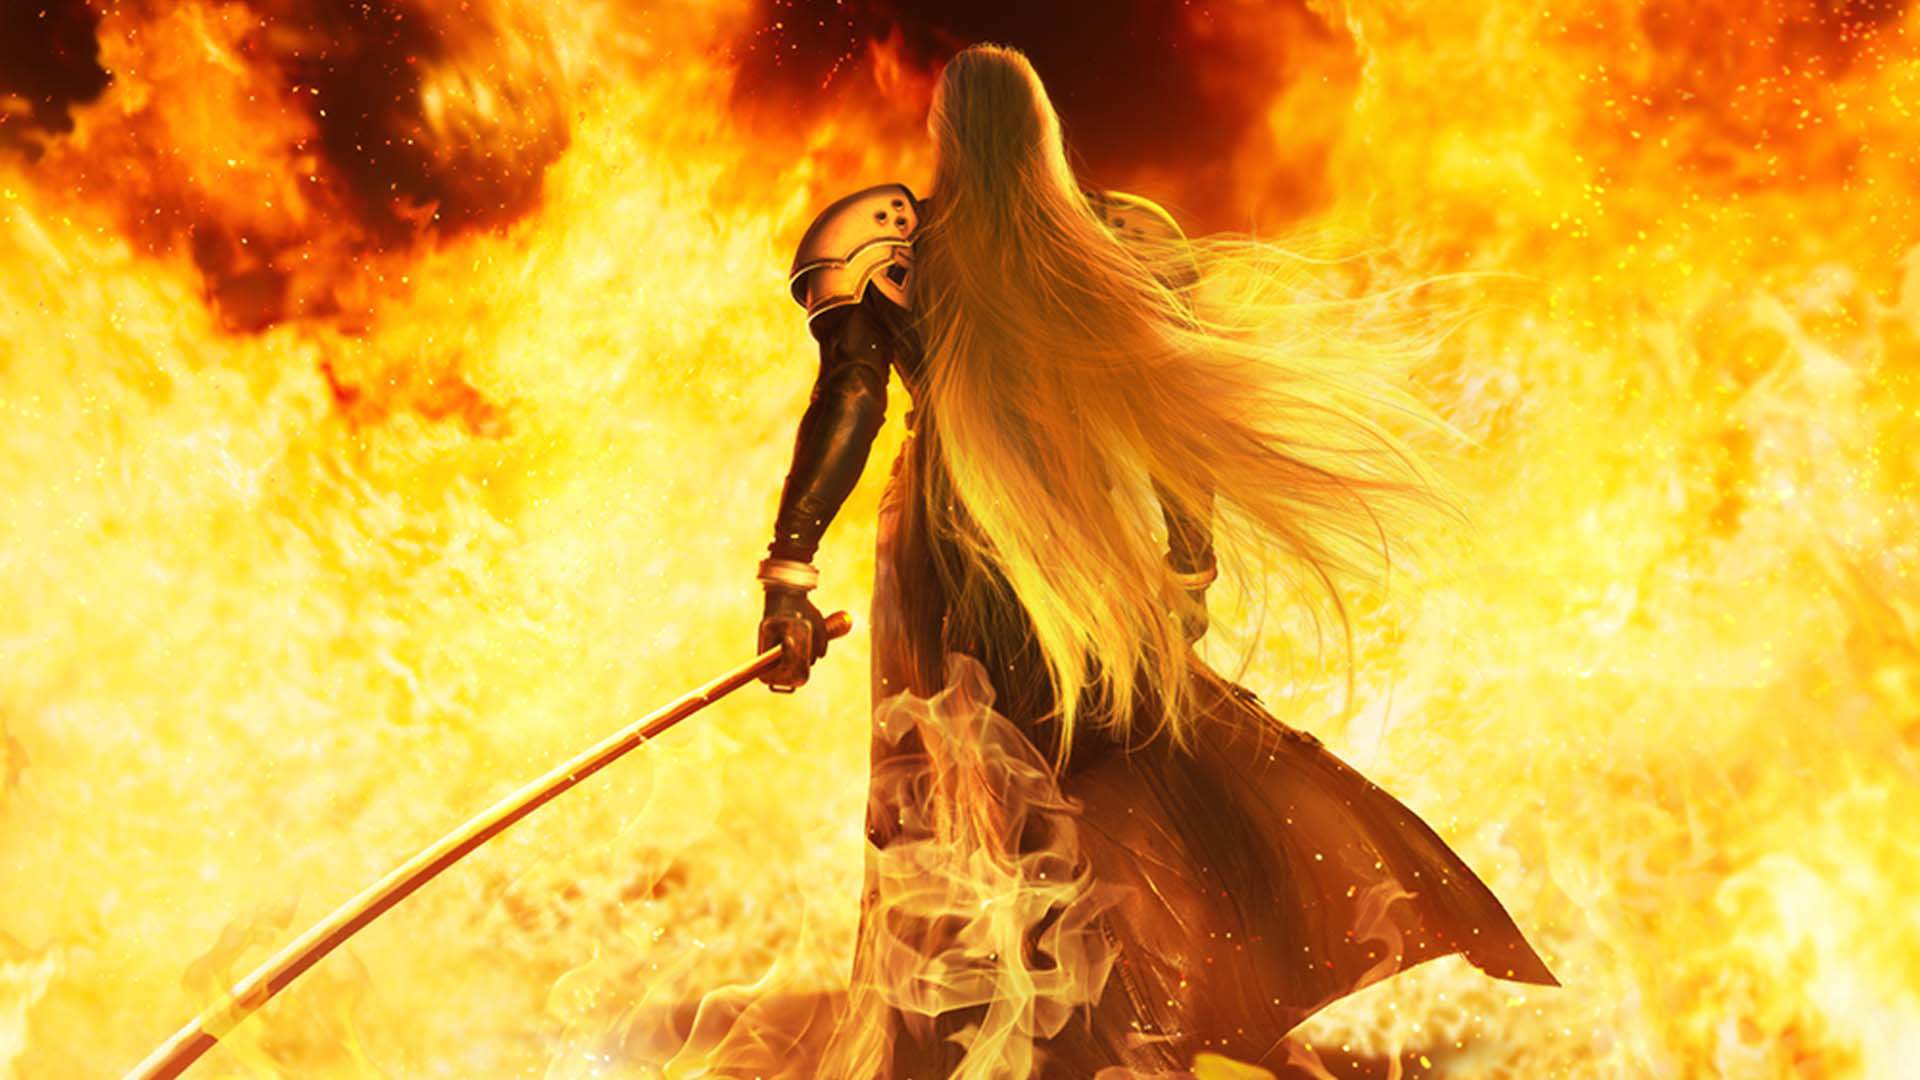 FINAL FANTASY VII REMAKE - Sephiroth